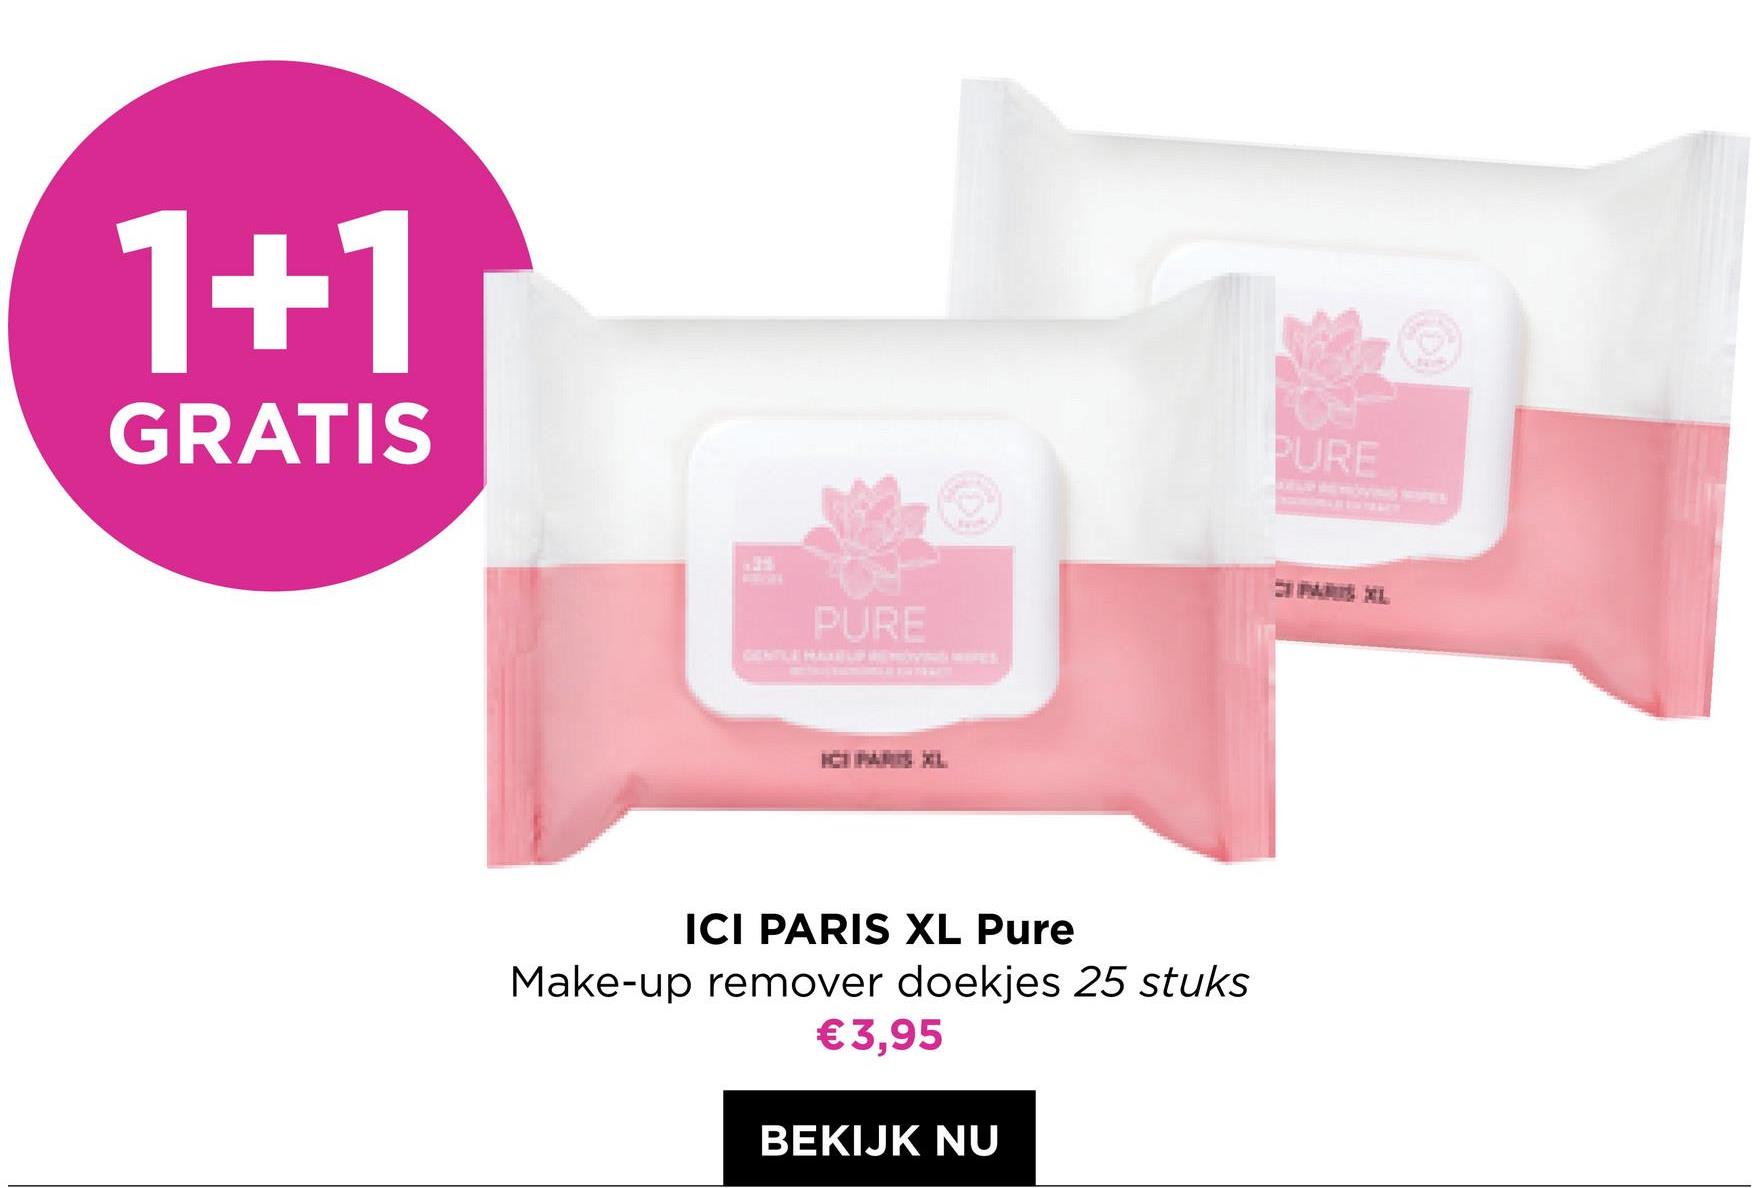 1+1
GRATIS
PURE
ICI PARIS XL Pure
Make-up remover doekjes 25 stuks
€3,95
BEKIJK NU
PURE
MAXL